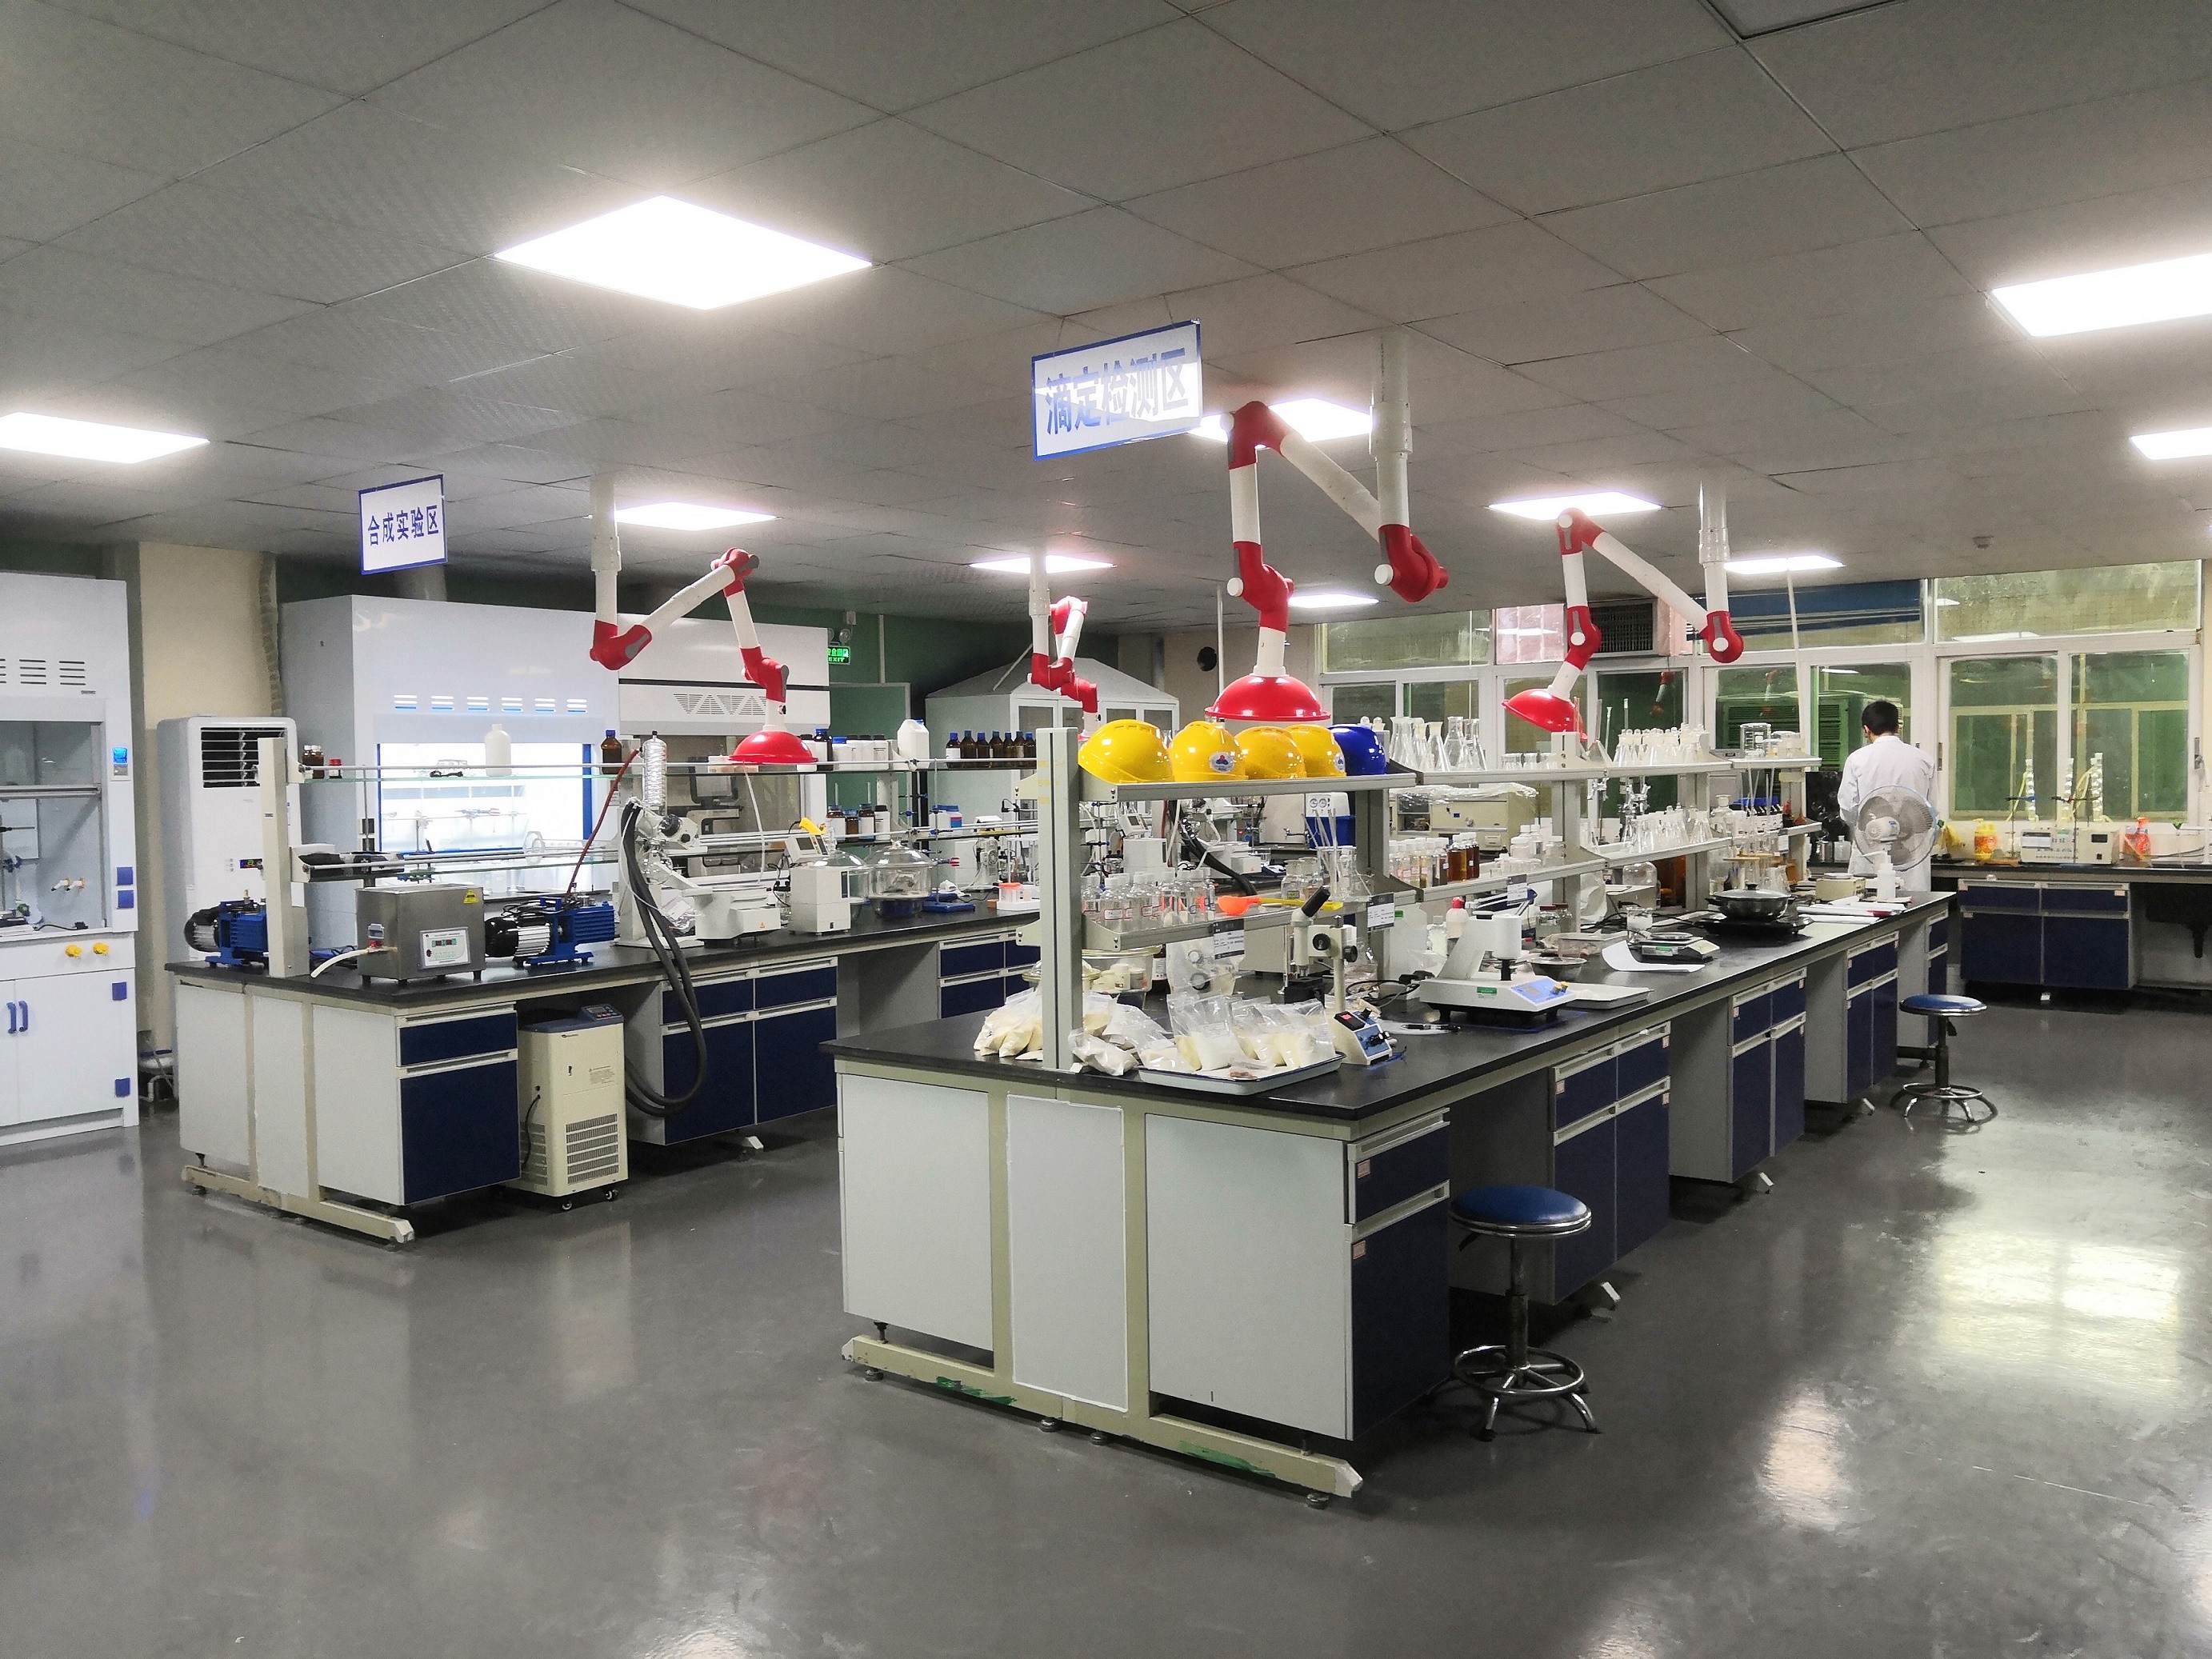 GUANGDONG CARDLO BIOTECHNOLOGY CO., LTD. خط إنتاج المصنع